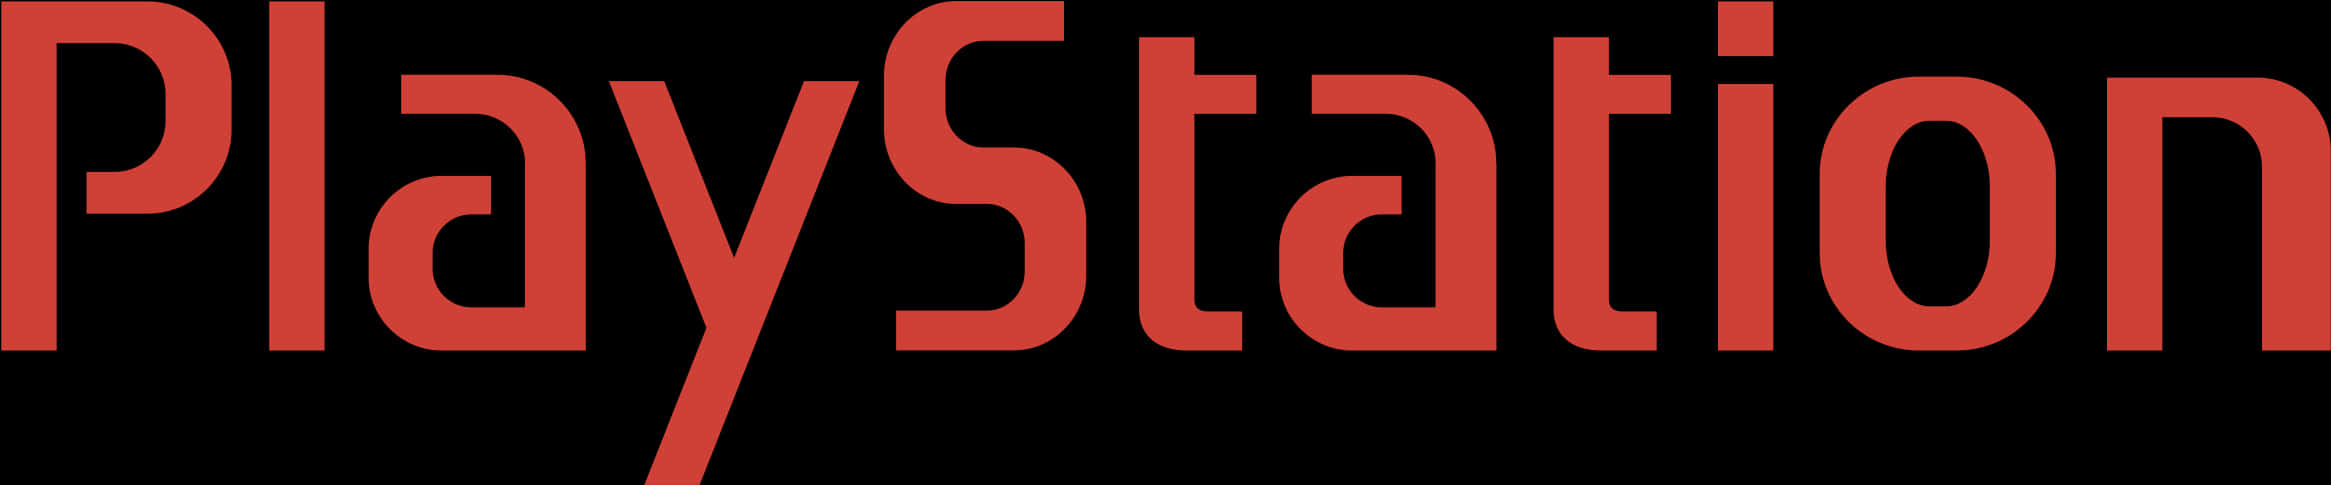 Play Station Classic Logo